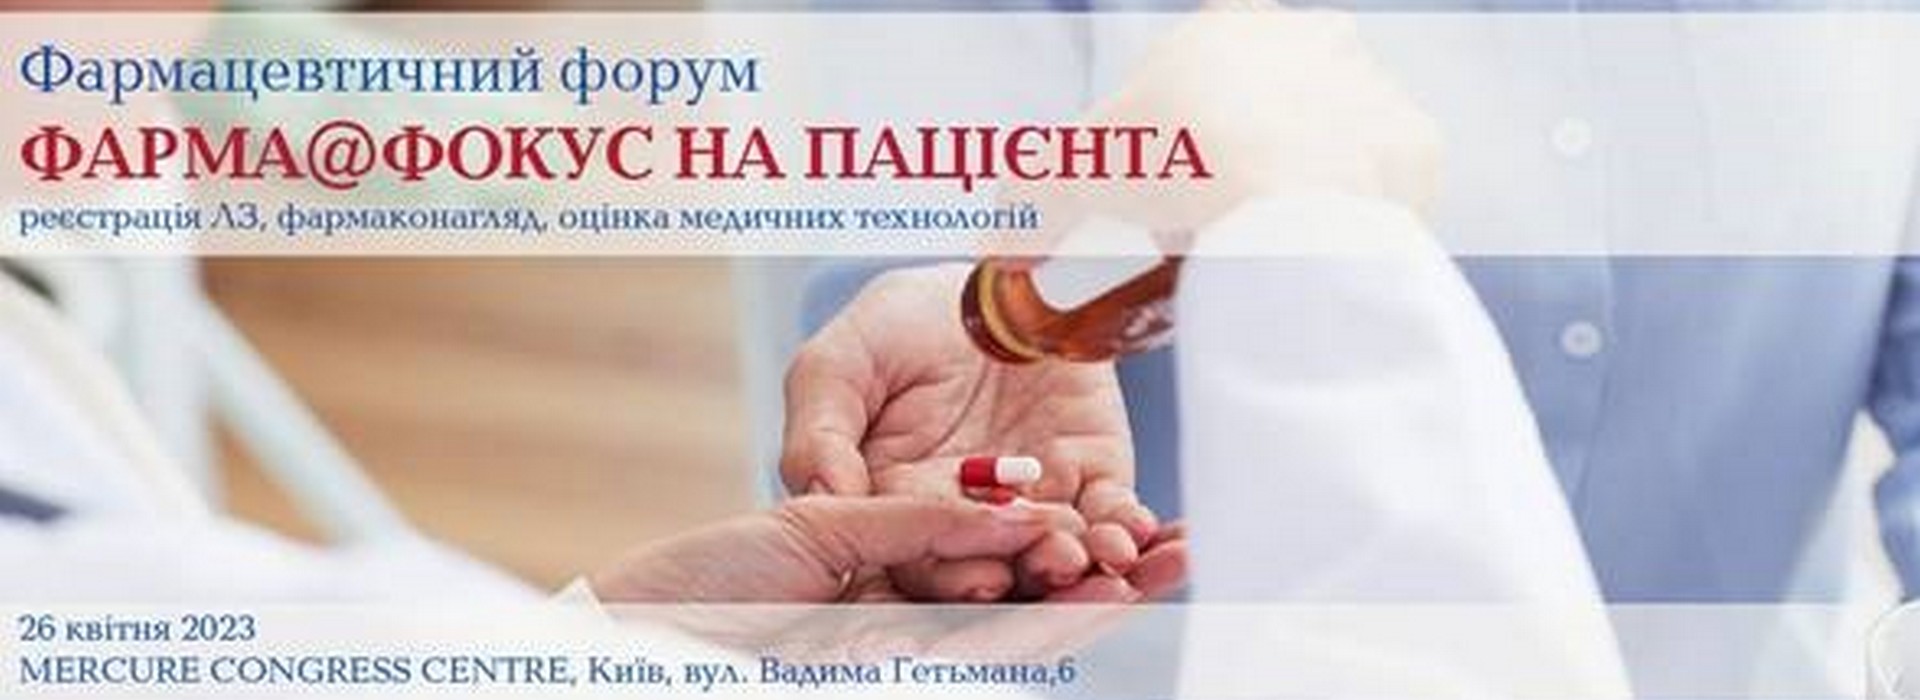 Фармацевтичний форум «Фарма@Фокус на пацієнта»